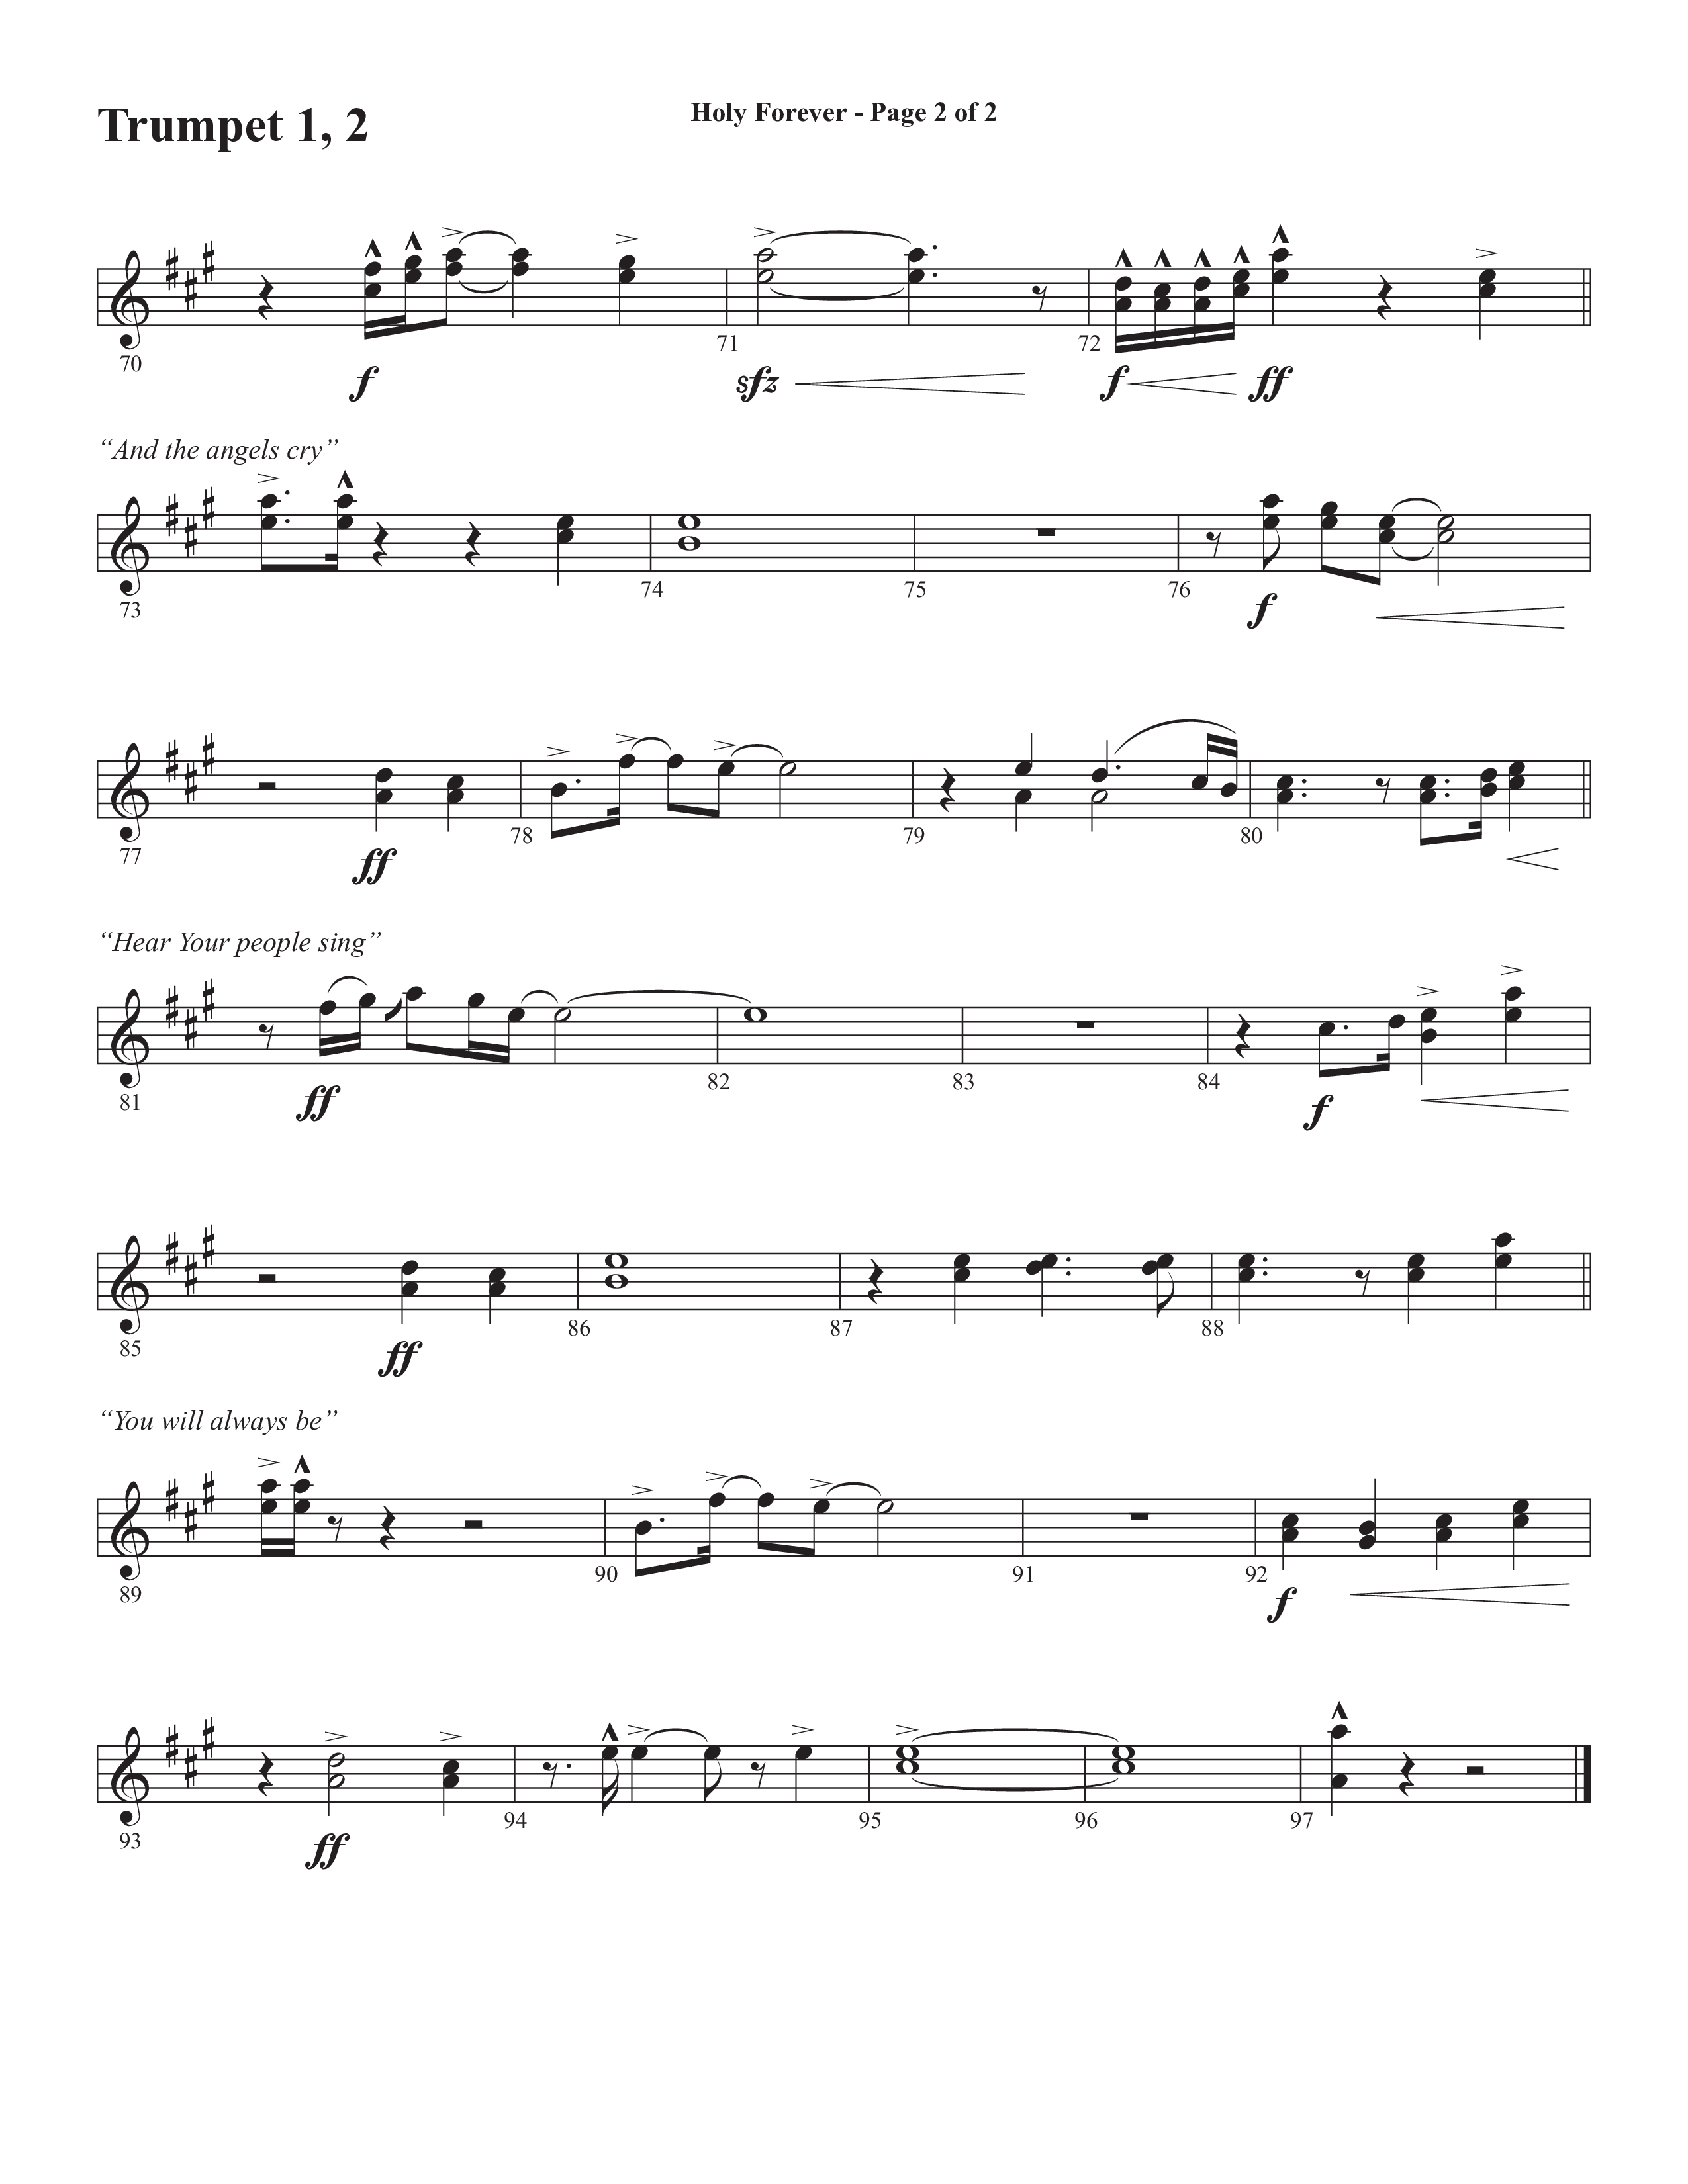 Holy Forever (Choral Anthem SATB) Trumpet 1,2 (Semsen Music / Arr. Cliff Duren)